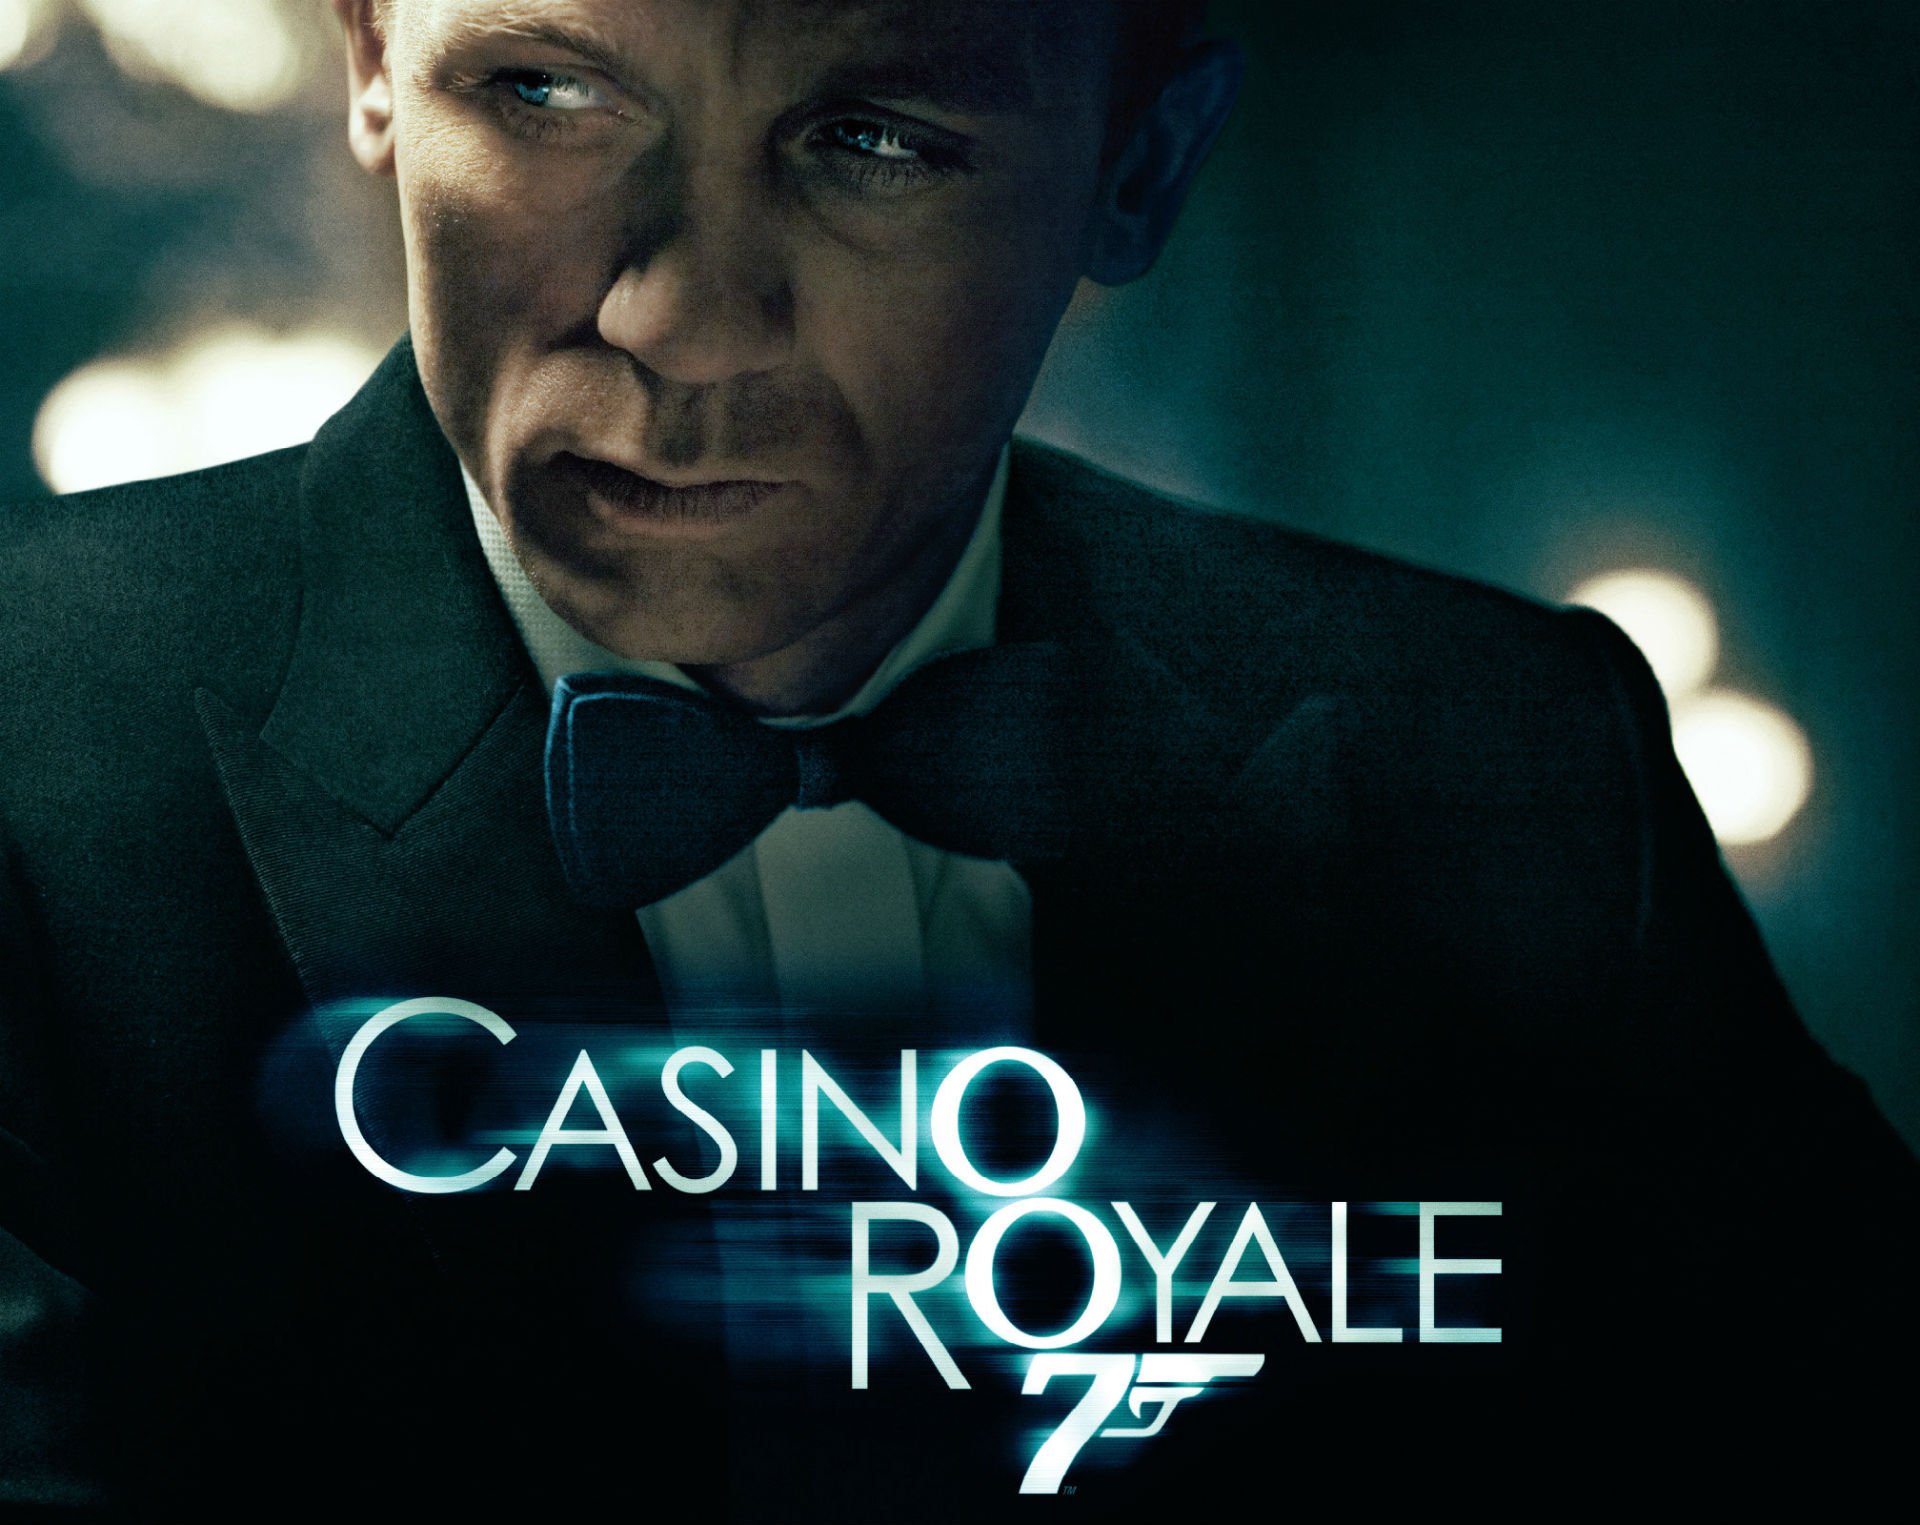 bond casino royale online